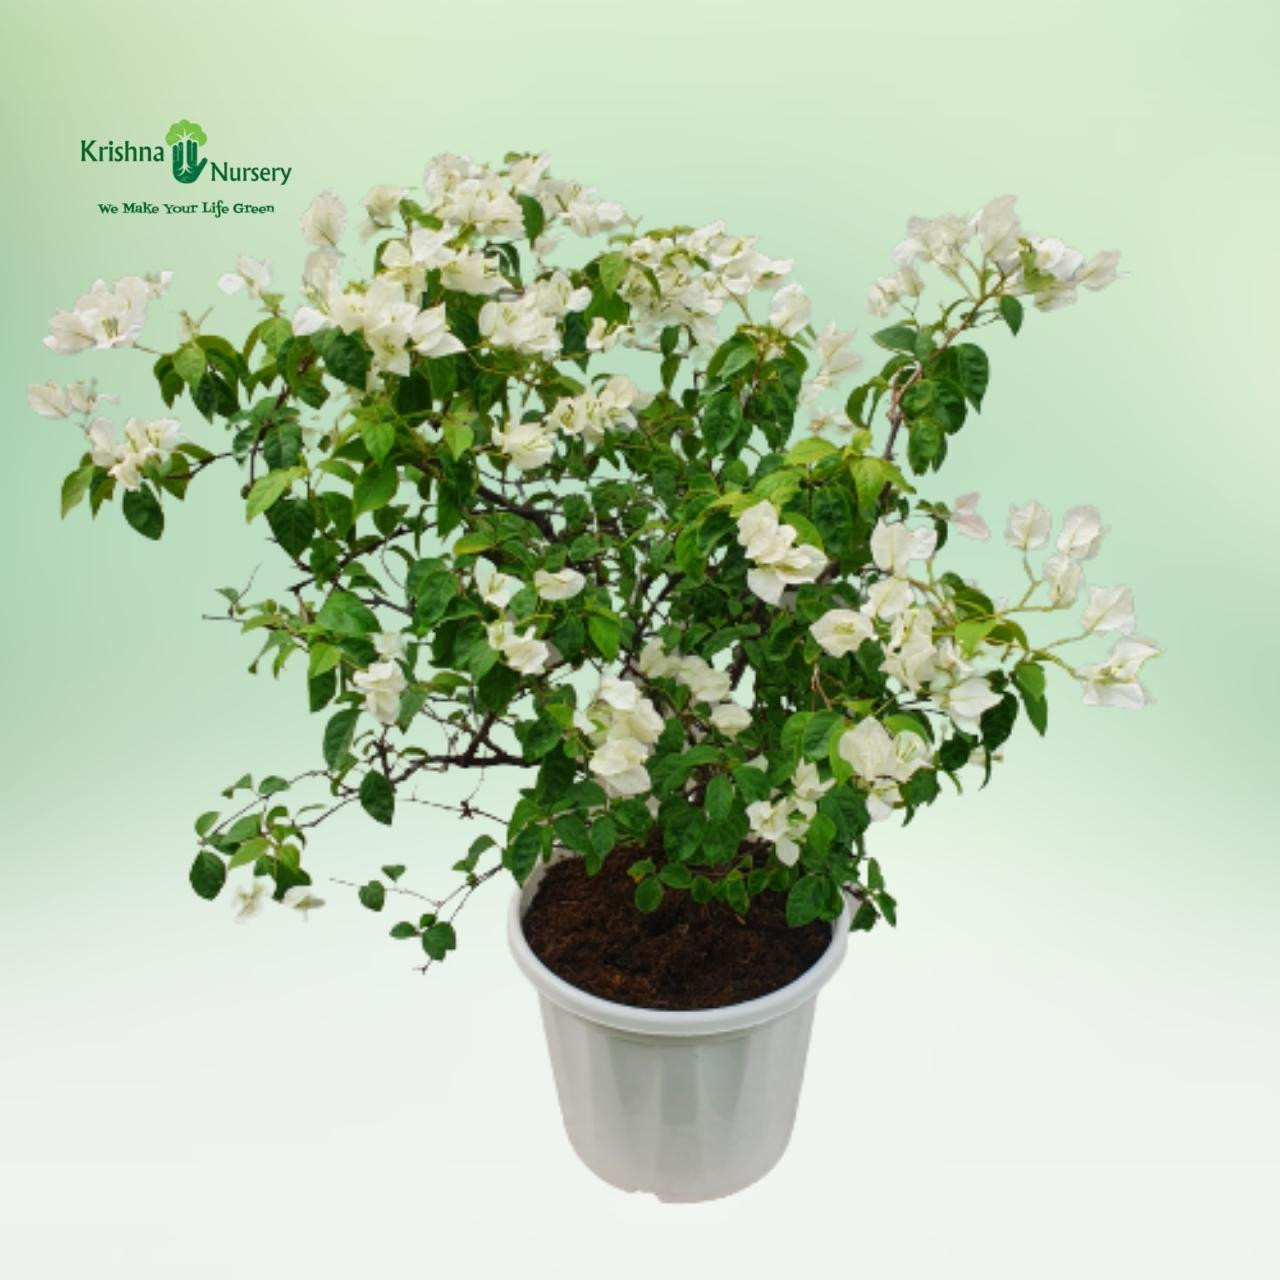 bougainvillea-white-flower-plant